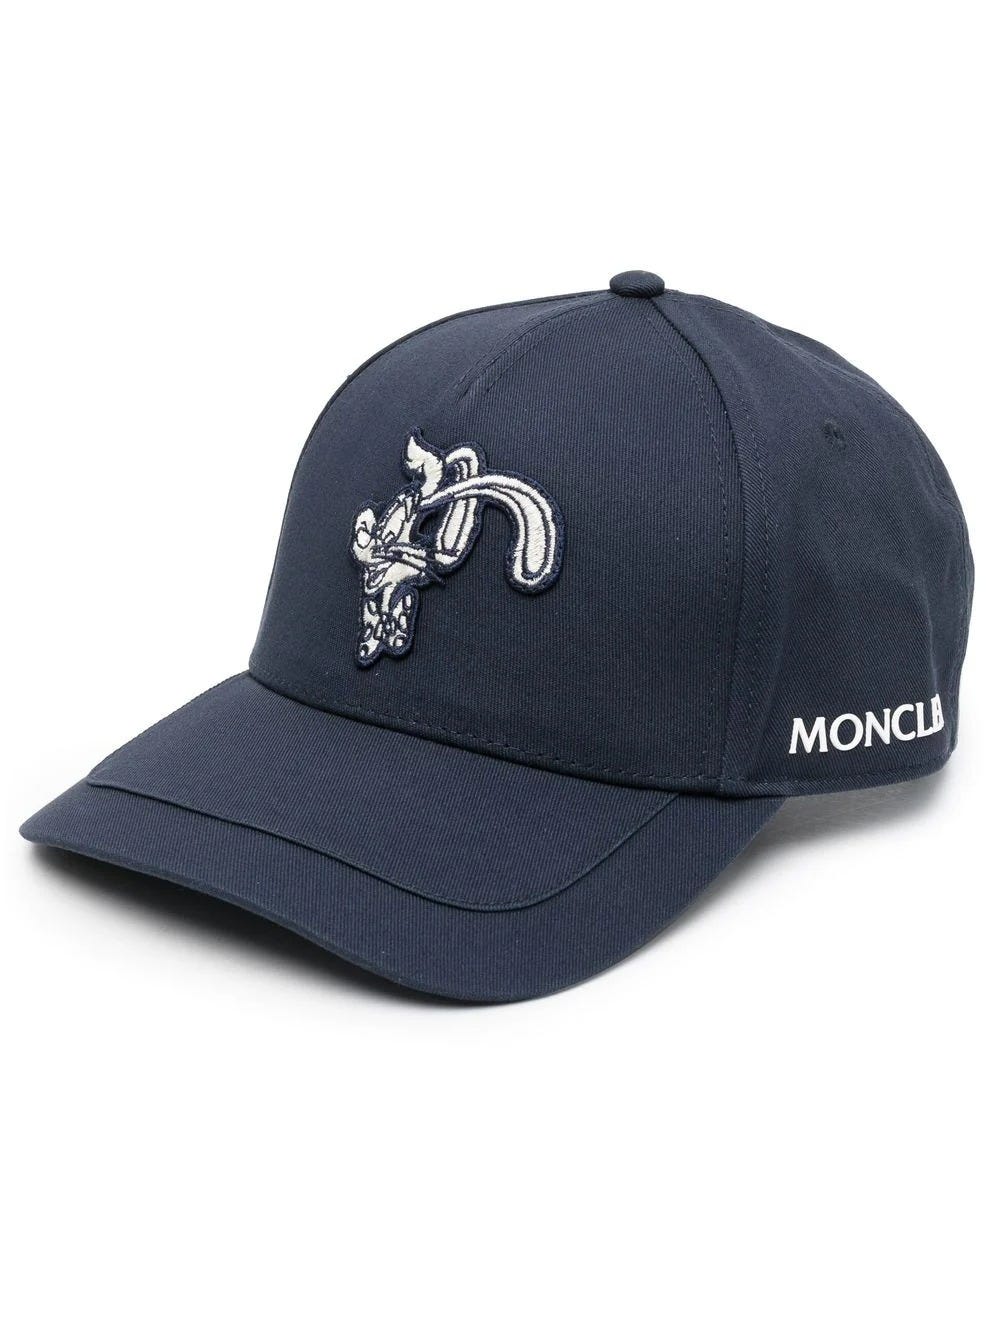 MONCLER MONCLER X DISNEY BLUE BASEBALL CAP